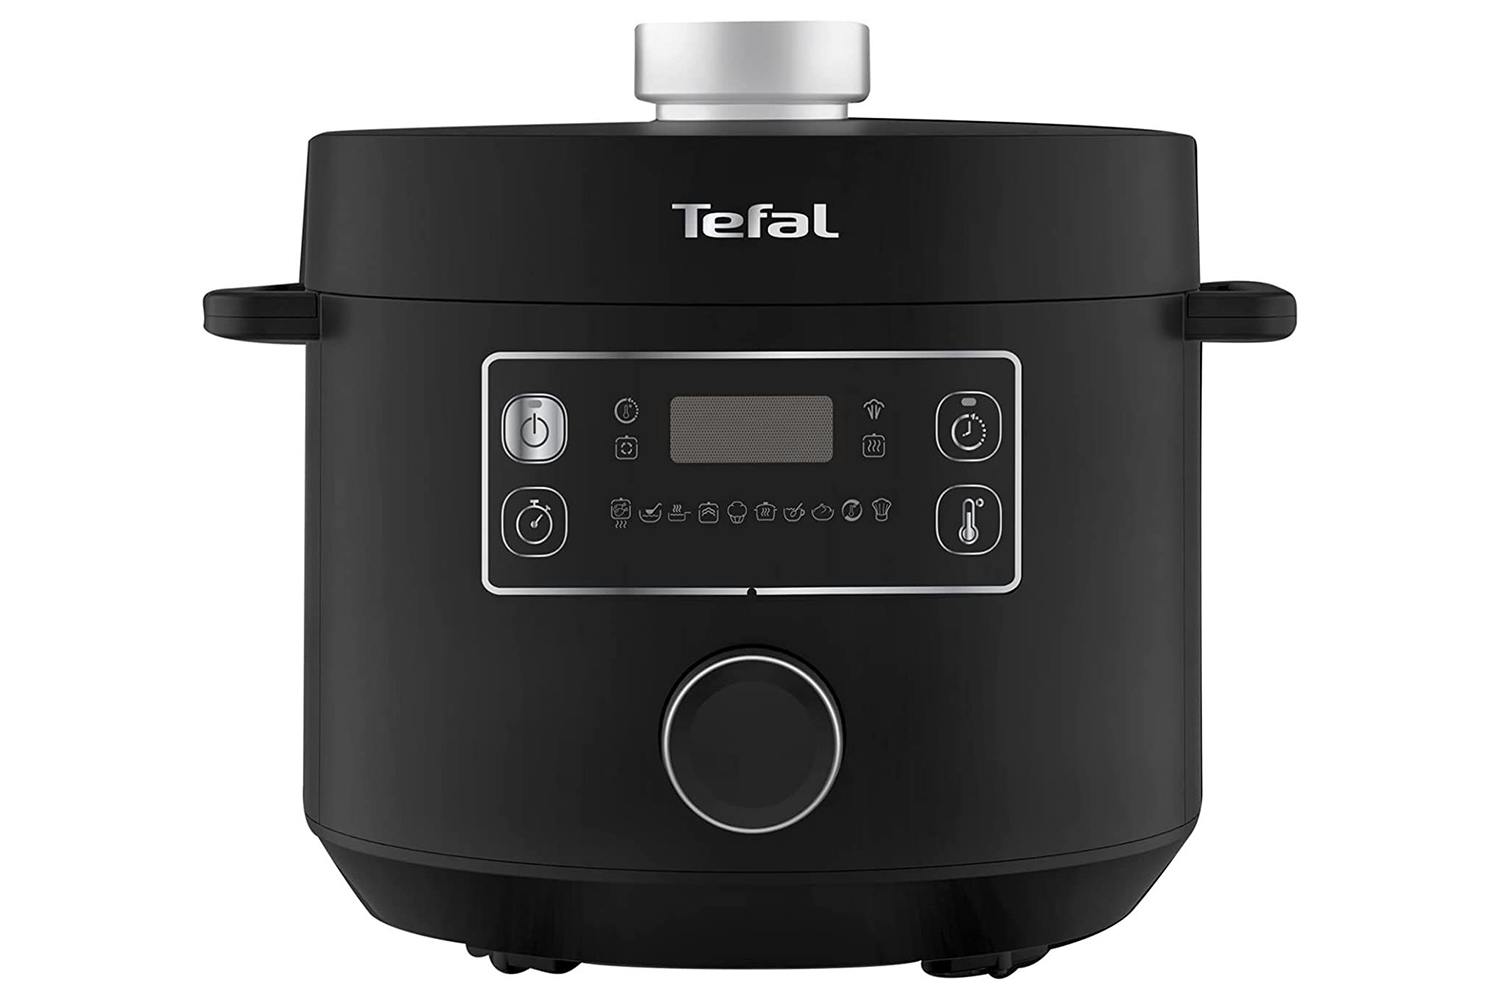 Tefal Turbo Cuisine 4.8L Multi Pressure Cooker | CY754840 | Black